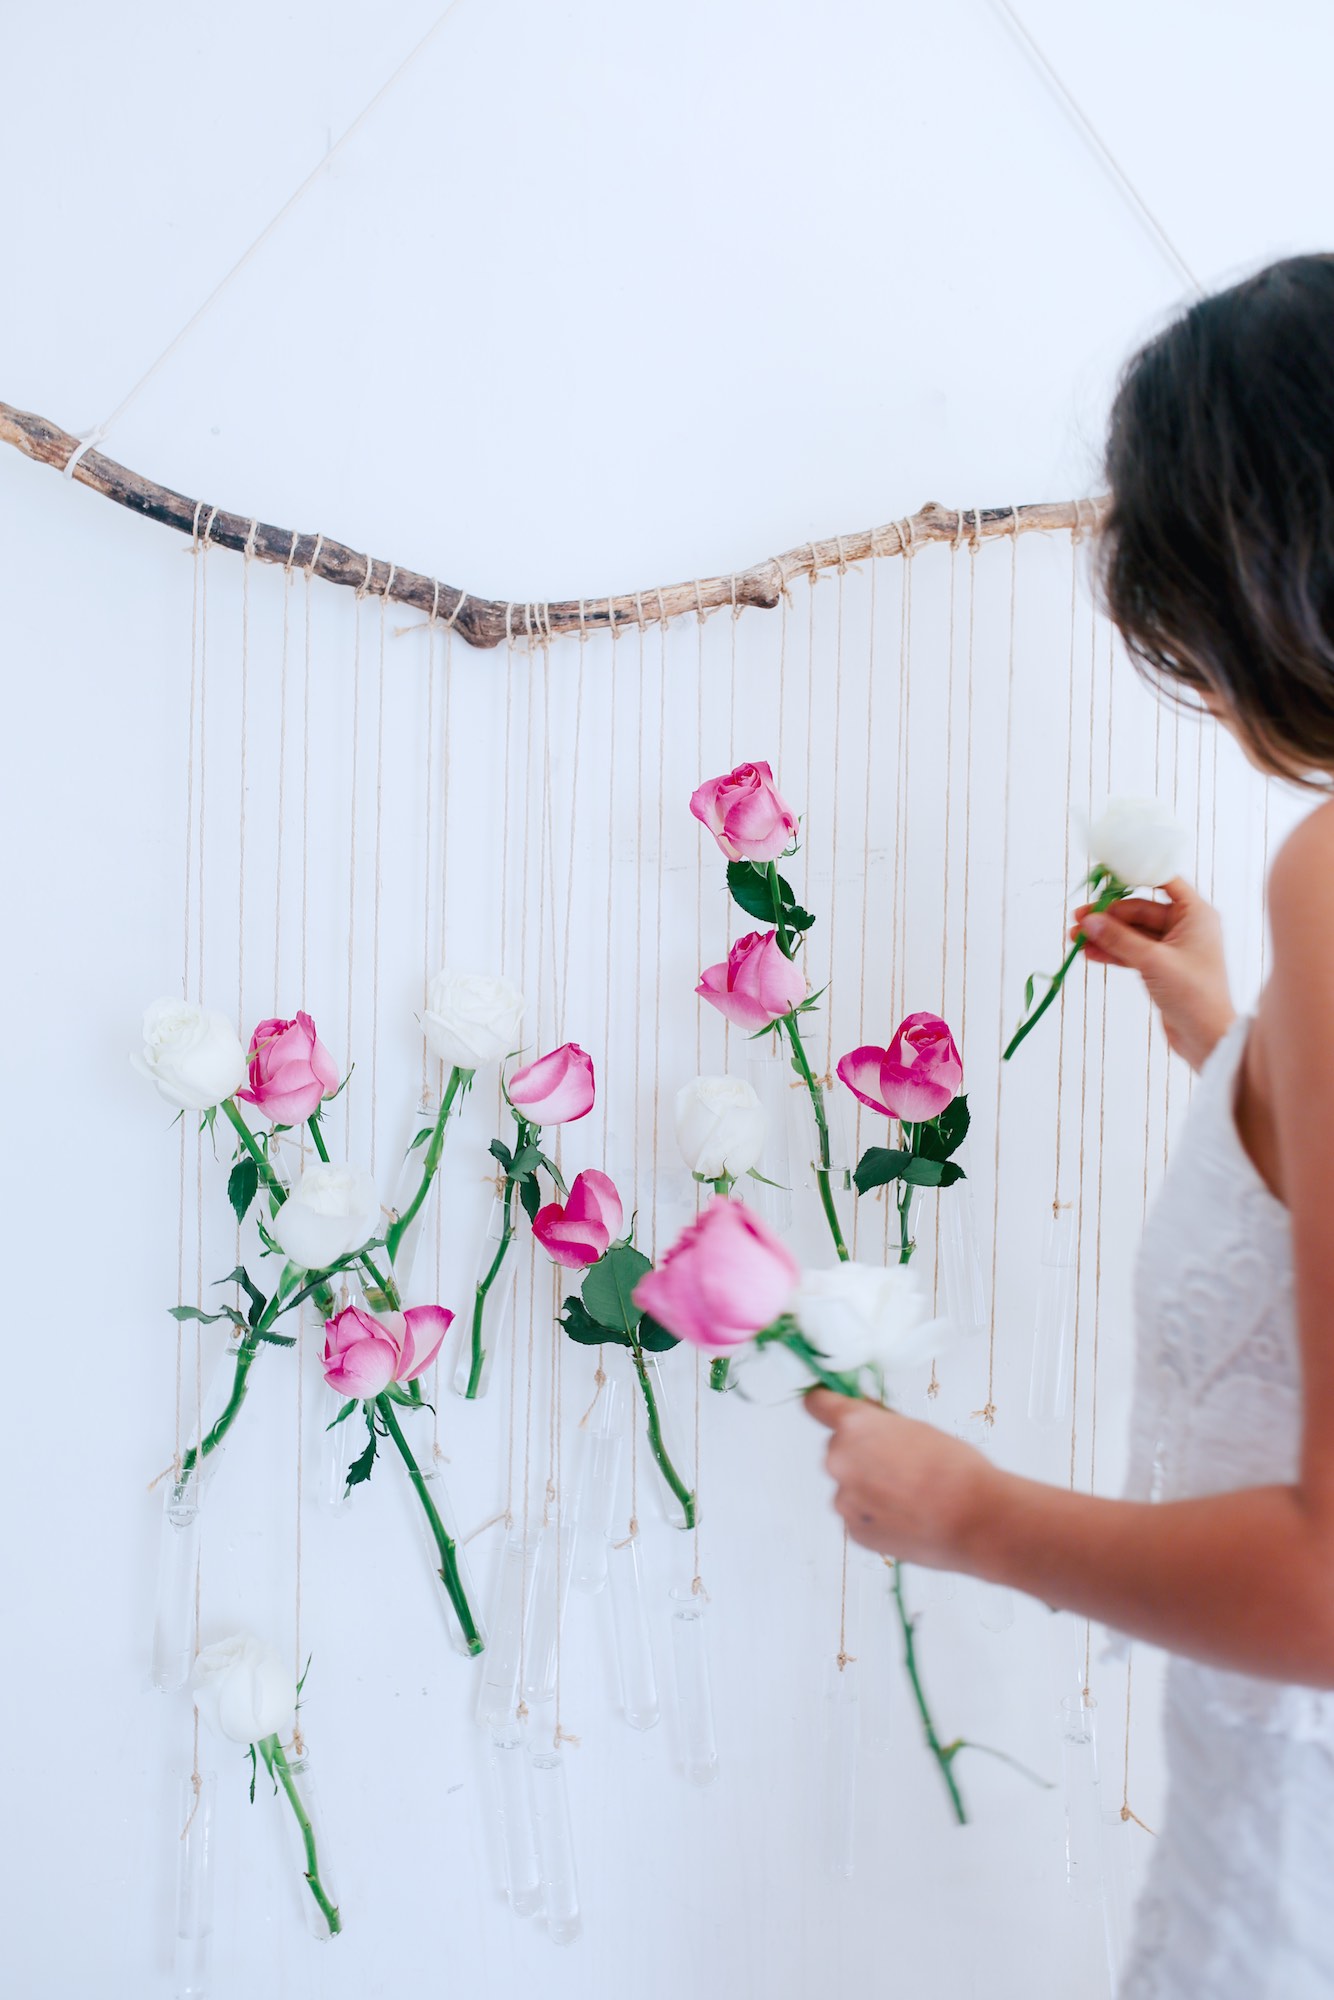 DIY Floral Vase Wall Hanging